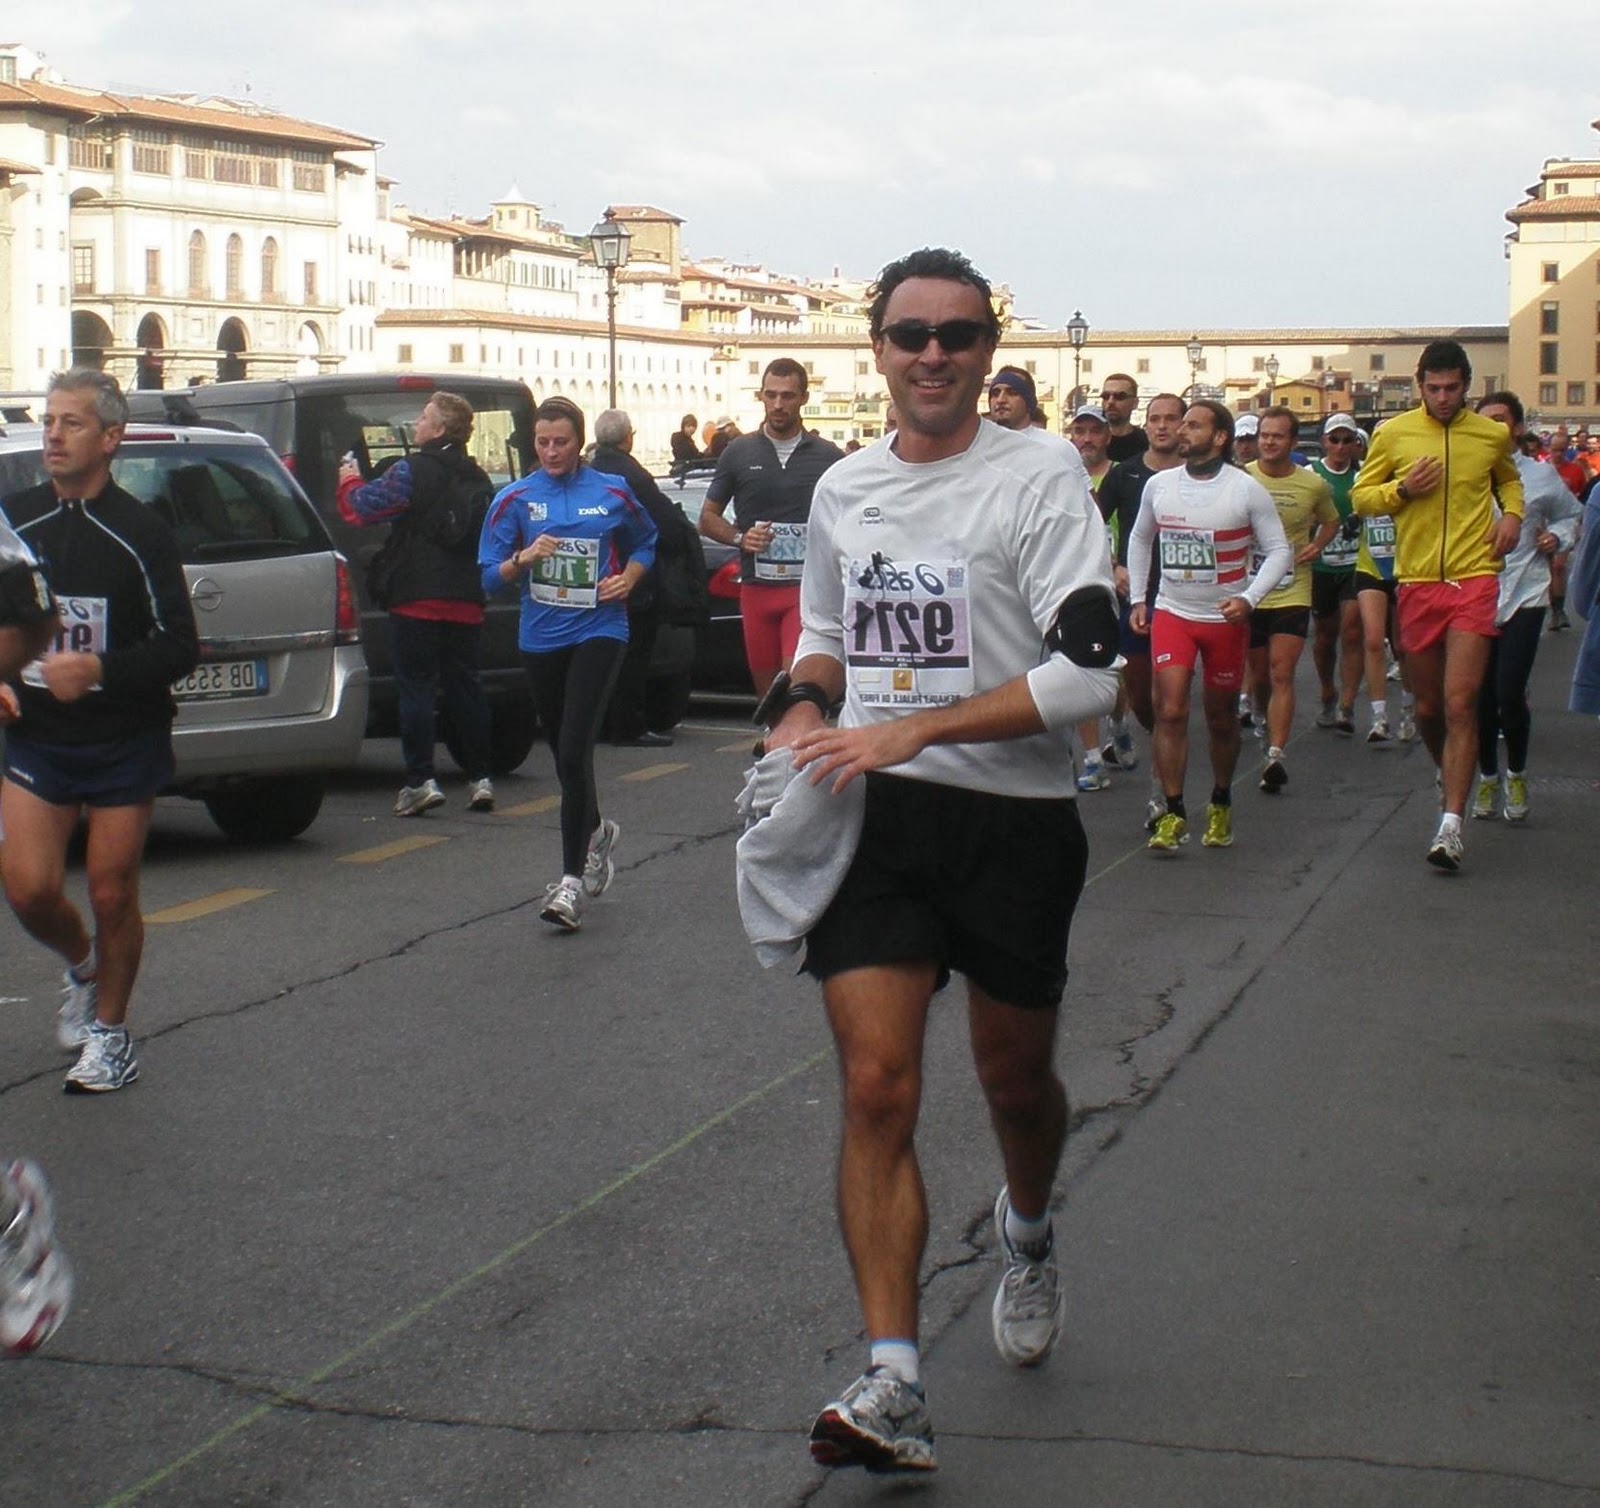 They run the Florence Marathon